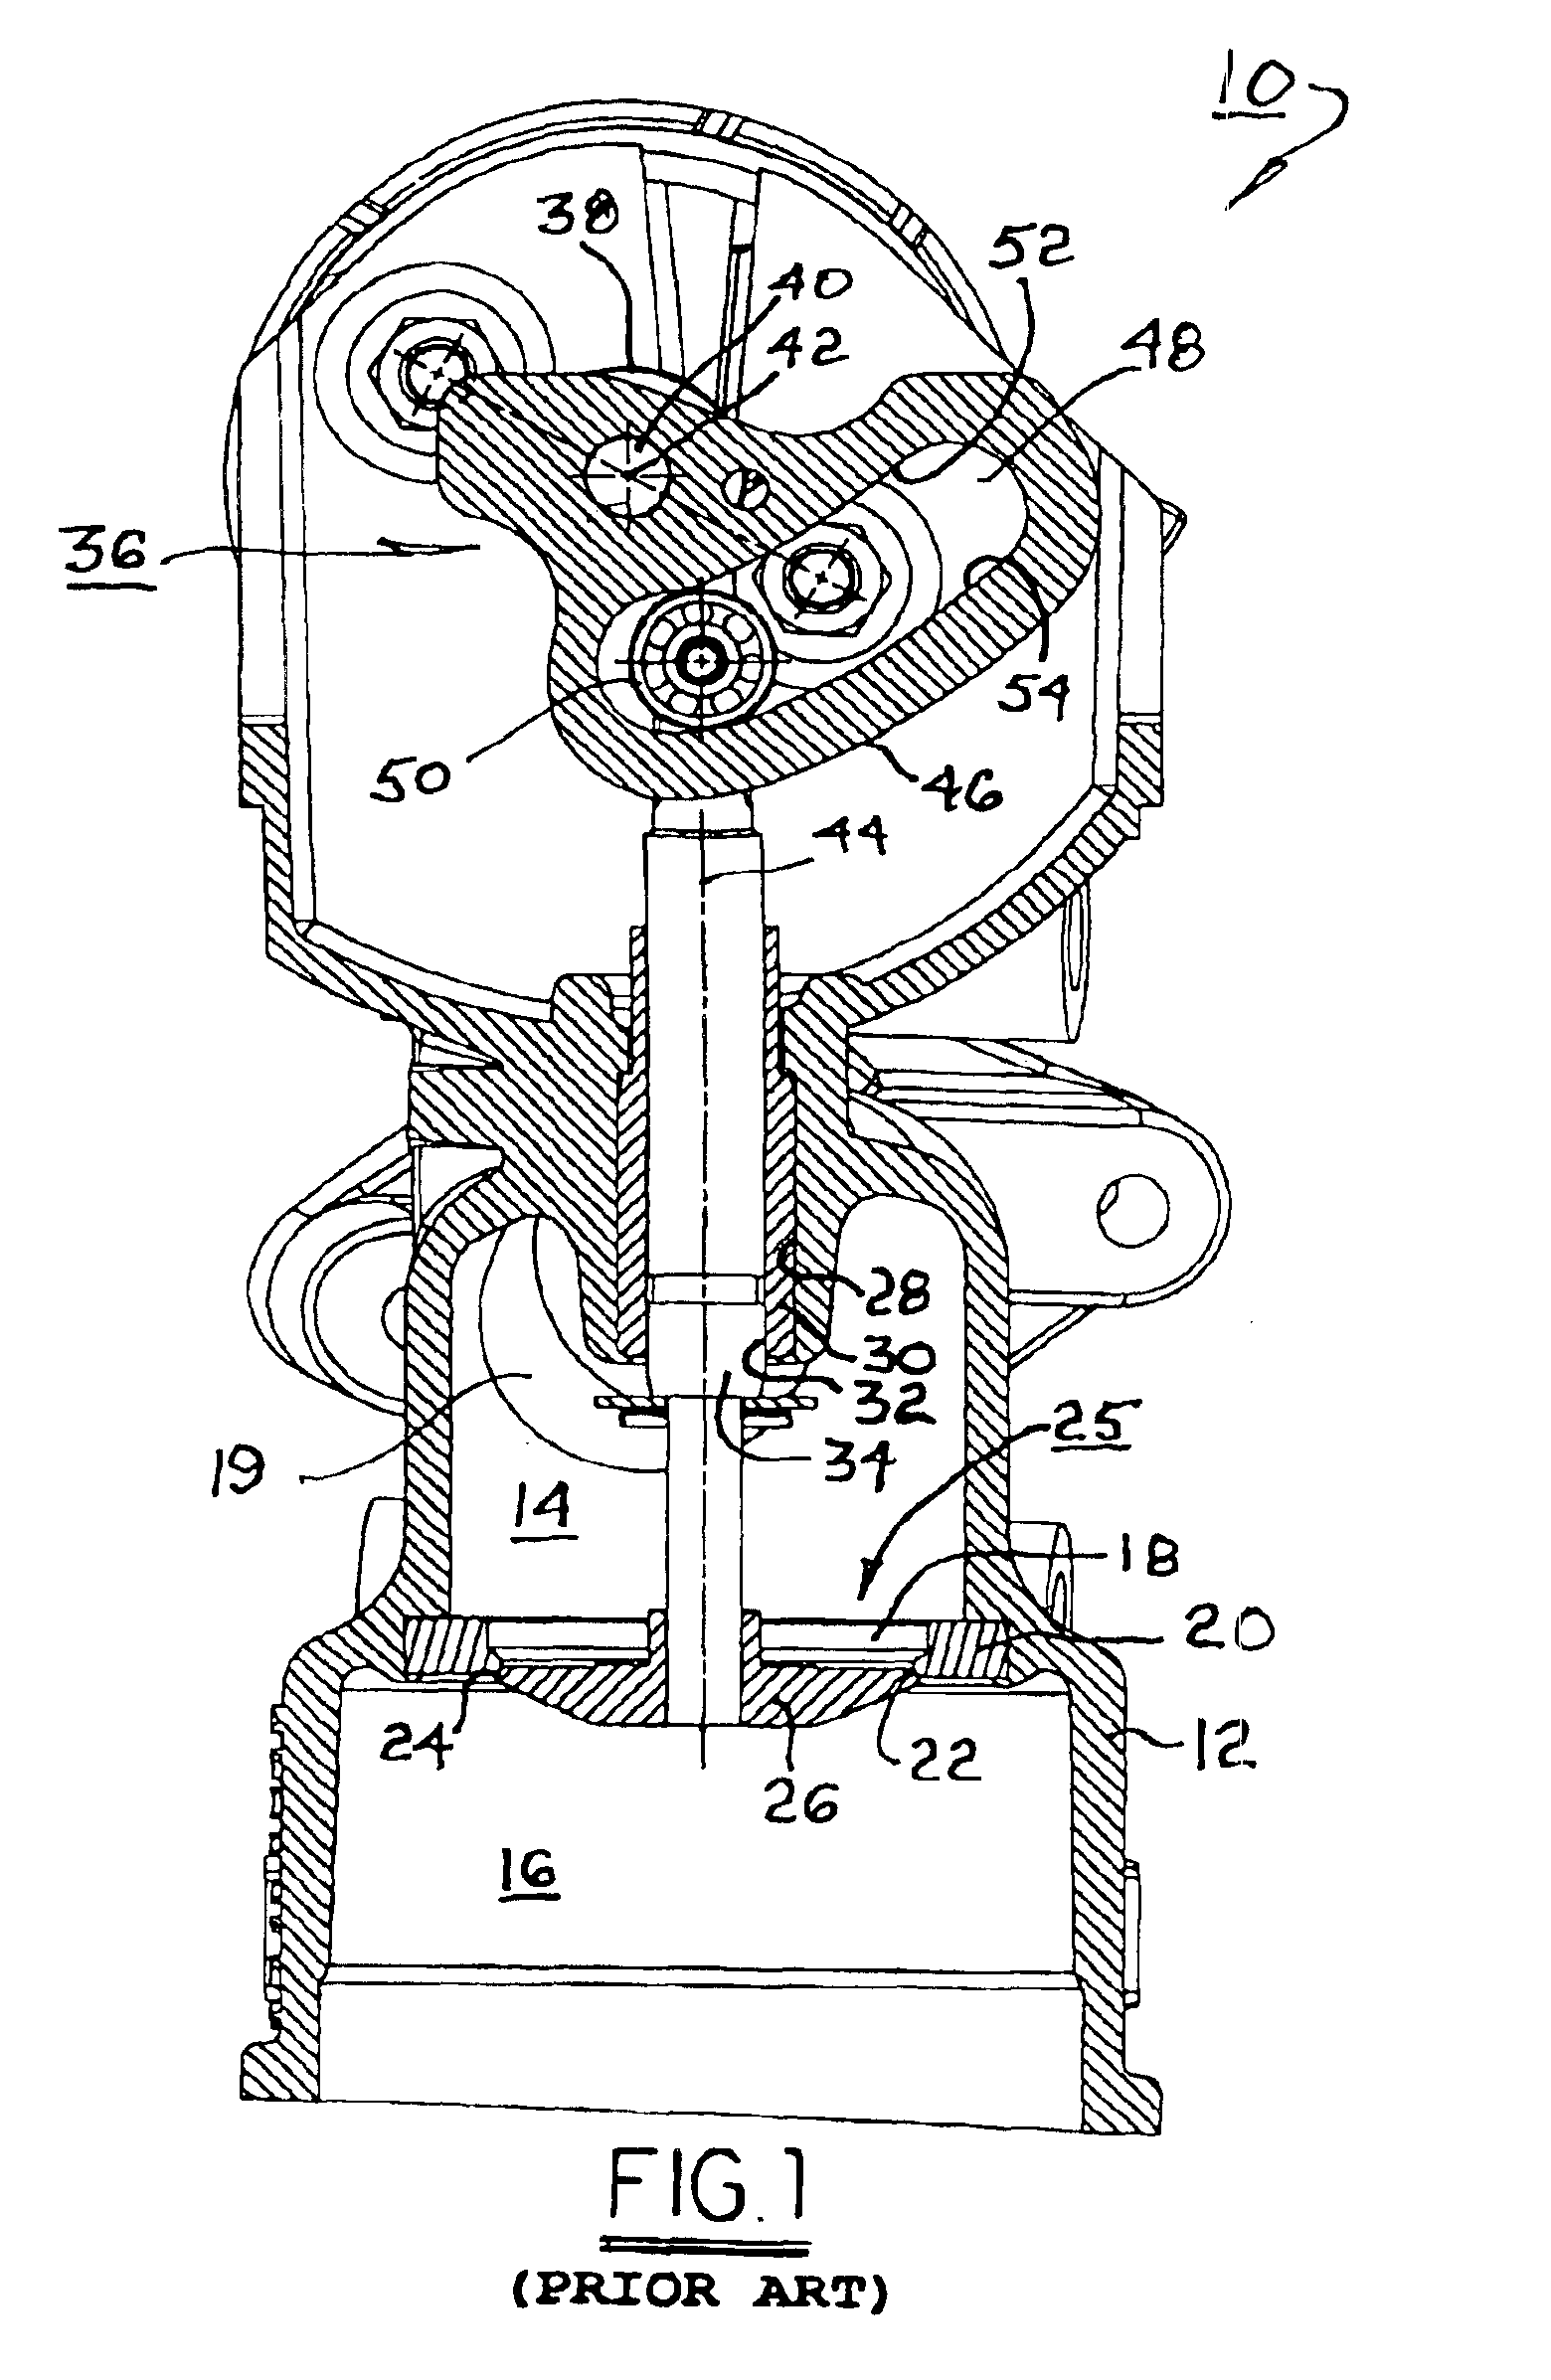 Rotary-actuator EGR valve having compliant seal/bushing